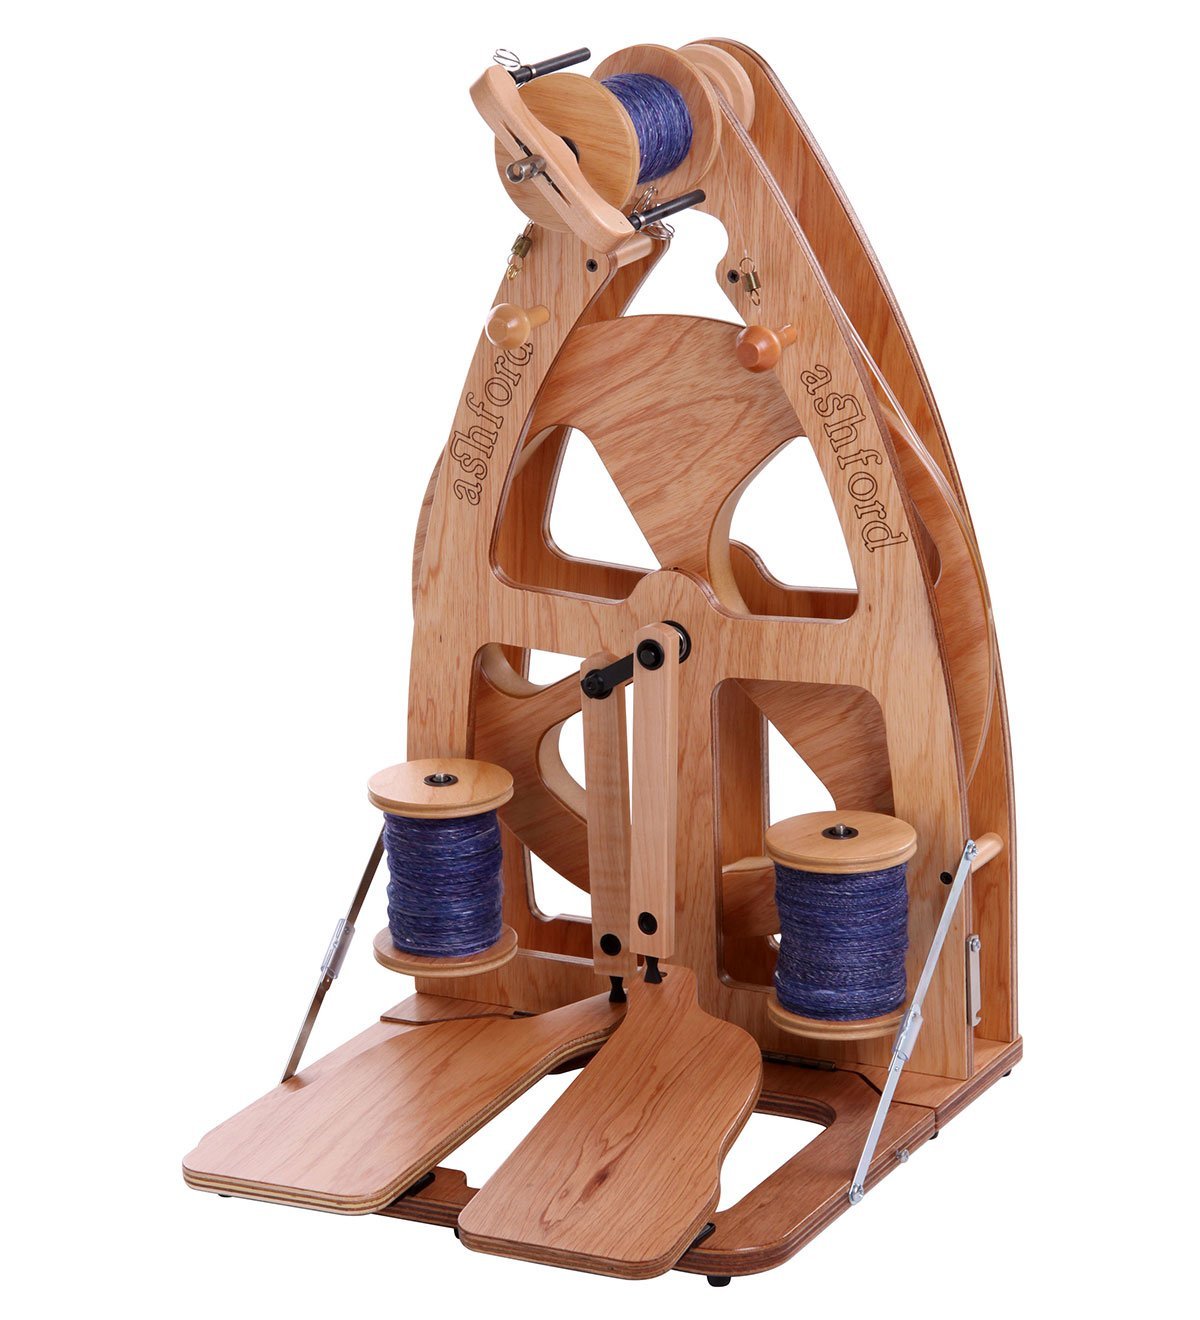 Joy 2 Spinning Wheel - Single Treadle at Wabi Sabi